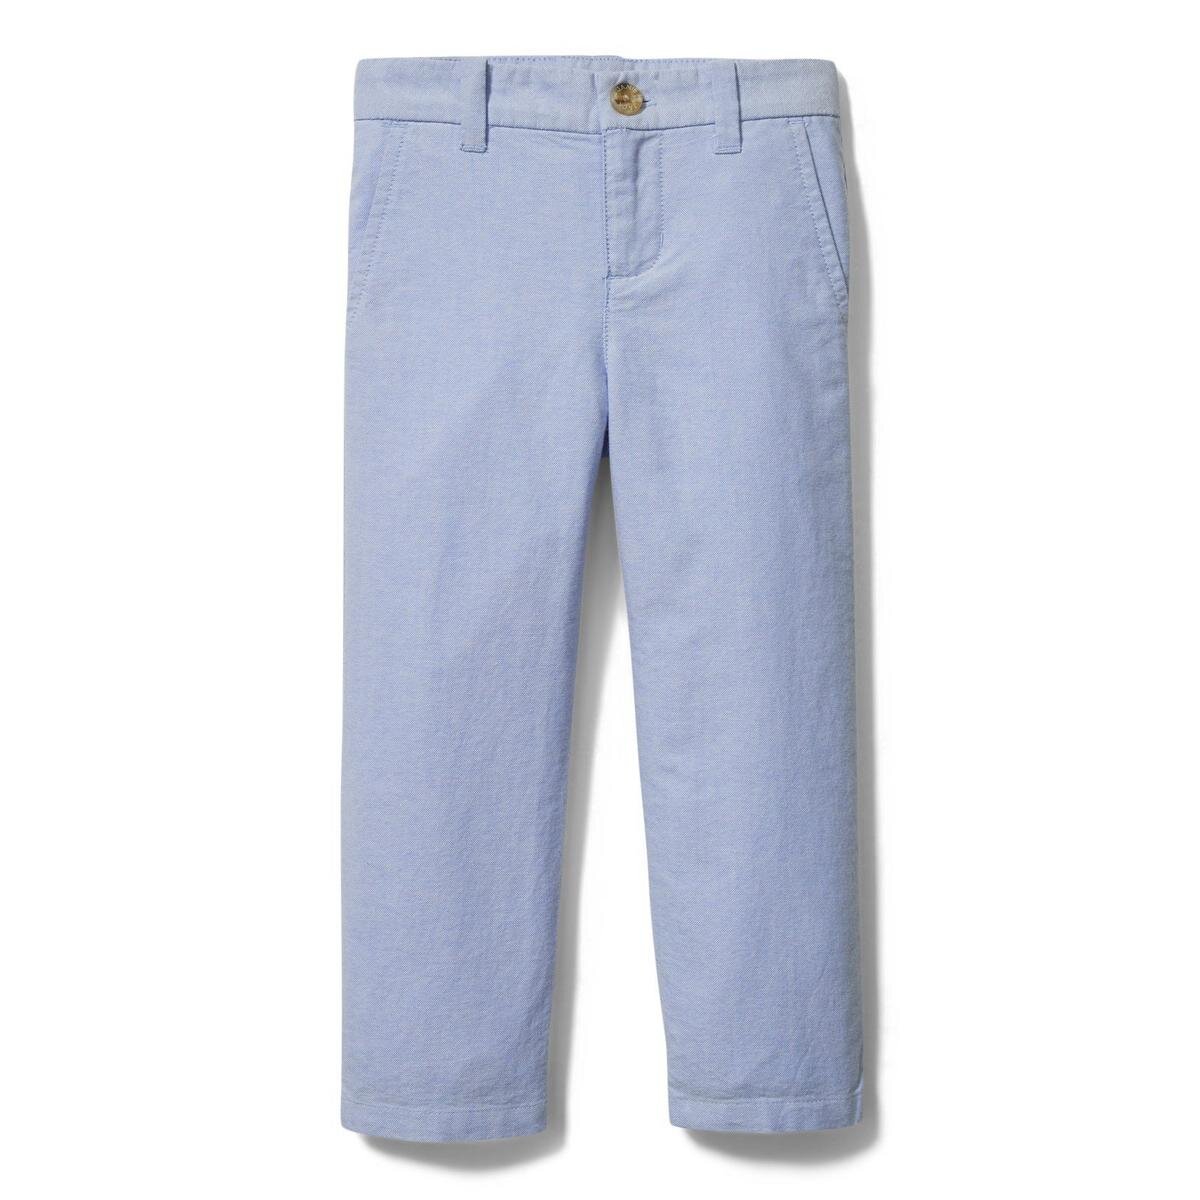 Boys Light Blue Pants